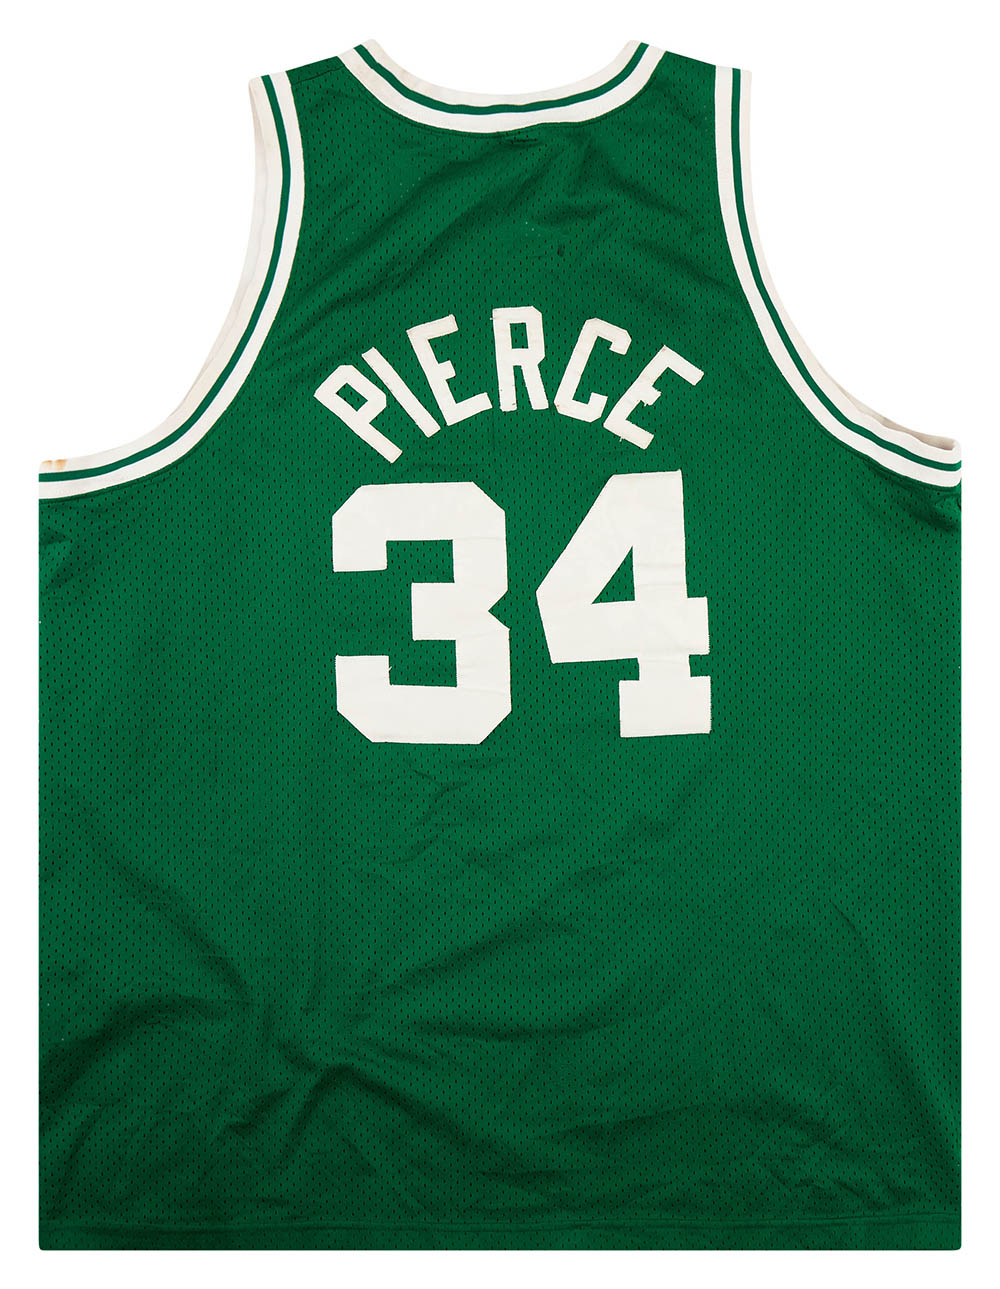 Boston Celtics Nike Paul Pierce Rewind Jersey: Size L